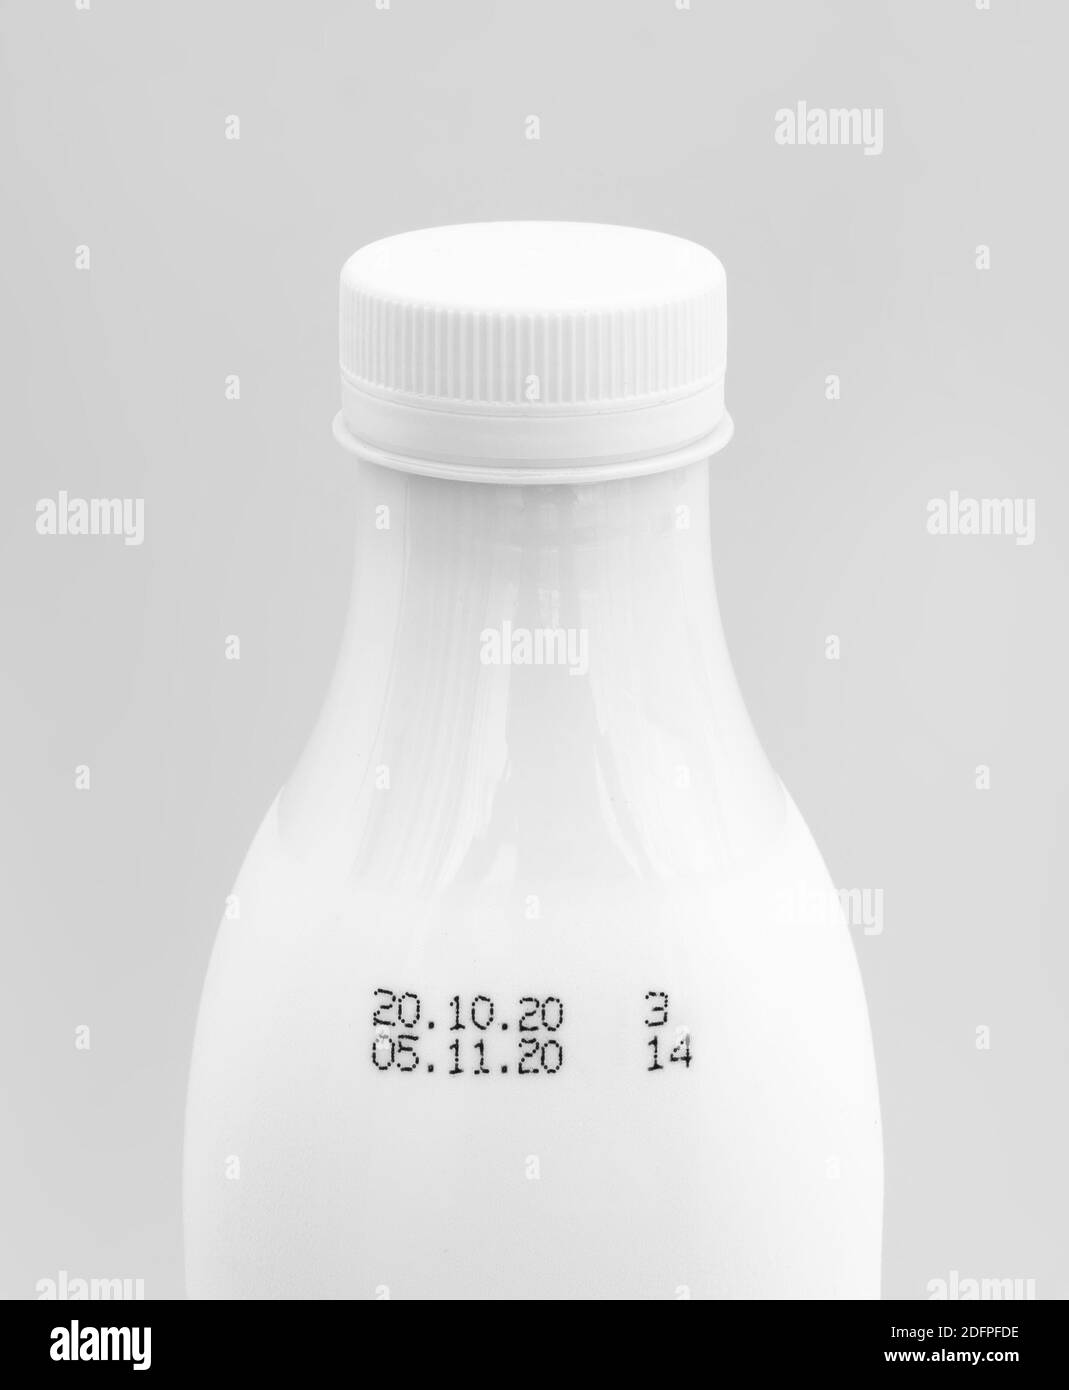 the shelf life on a milk bottle Stock Photo